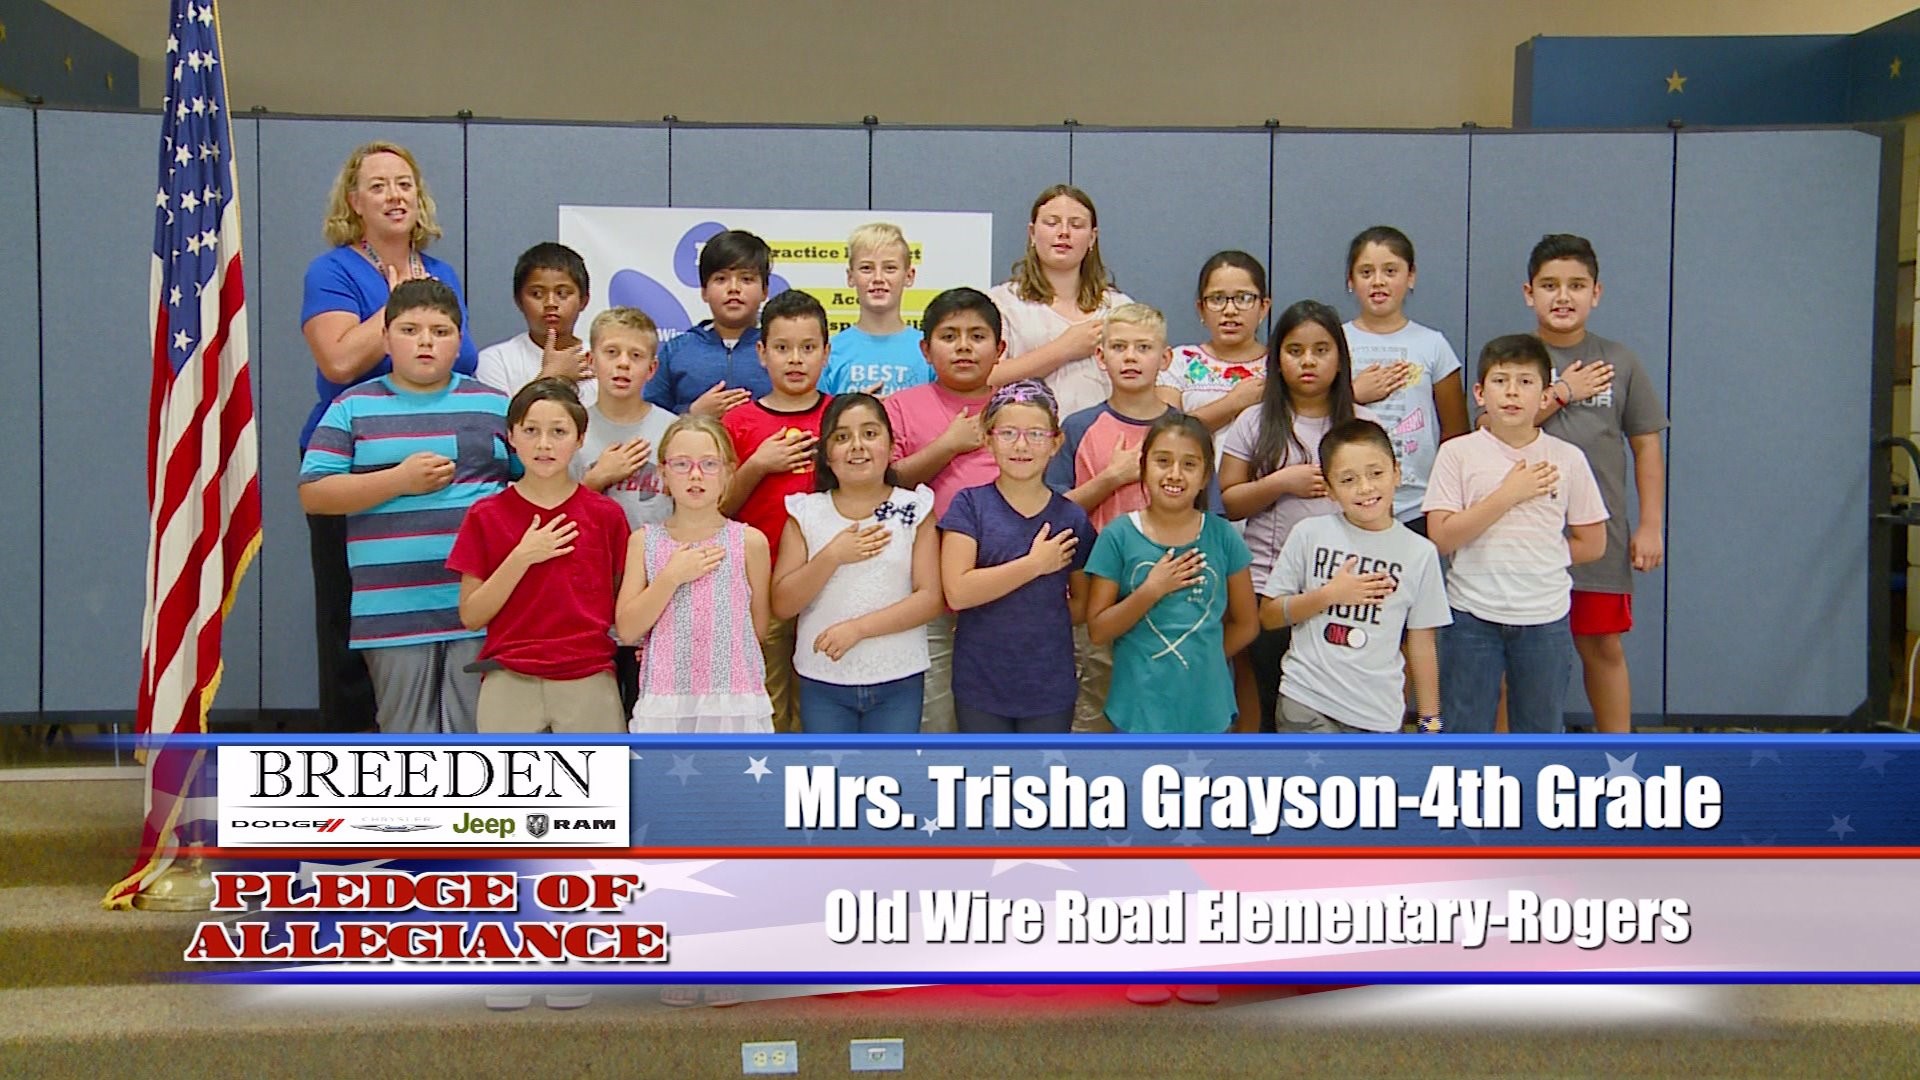 Mrs. Trisha Grayson  4th Grade old Wire Road Elementary, Rogers